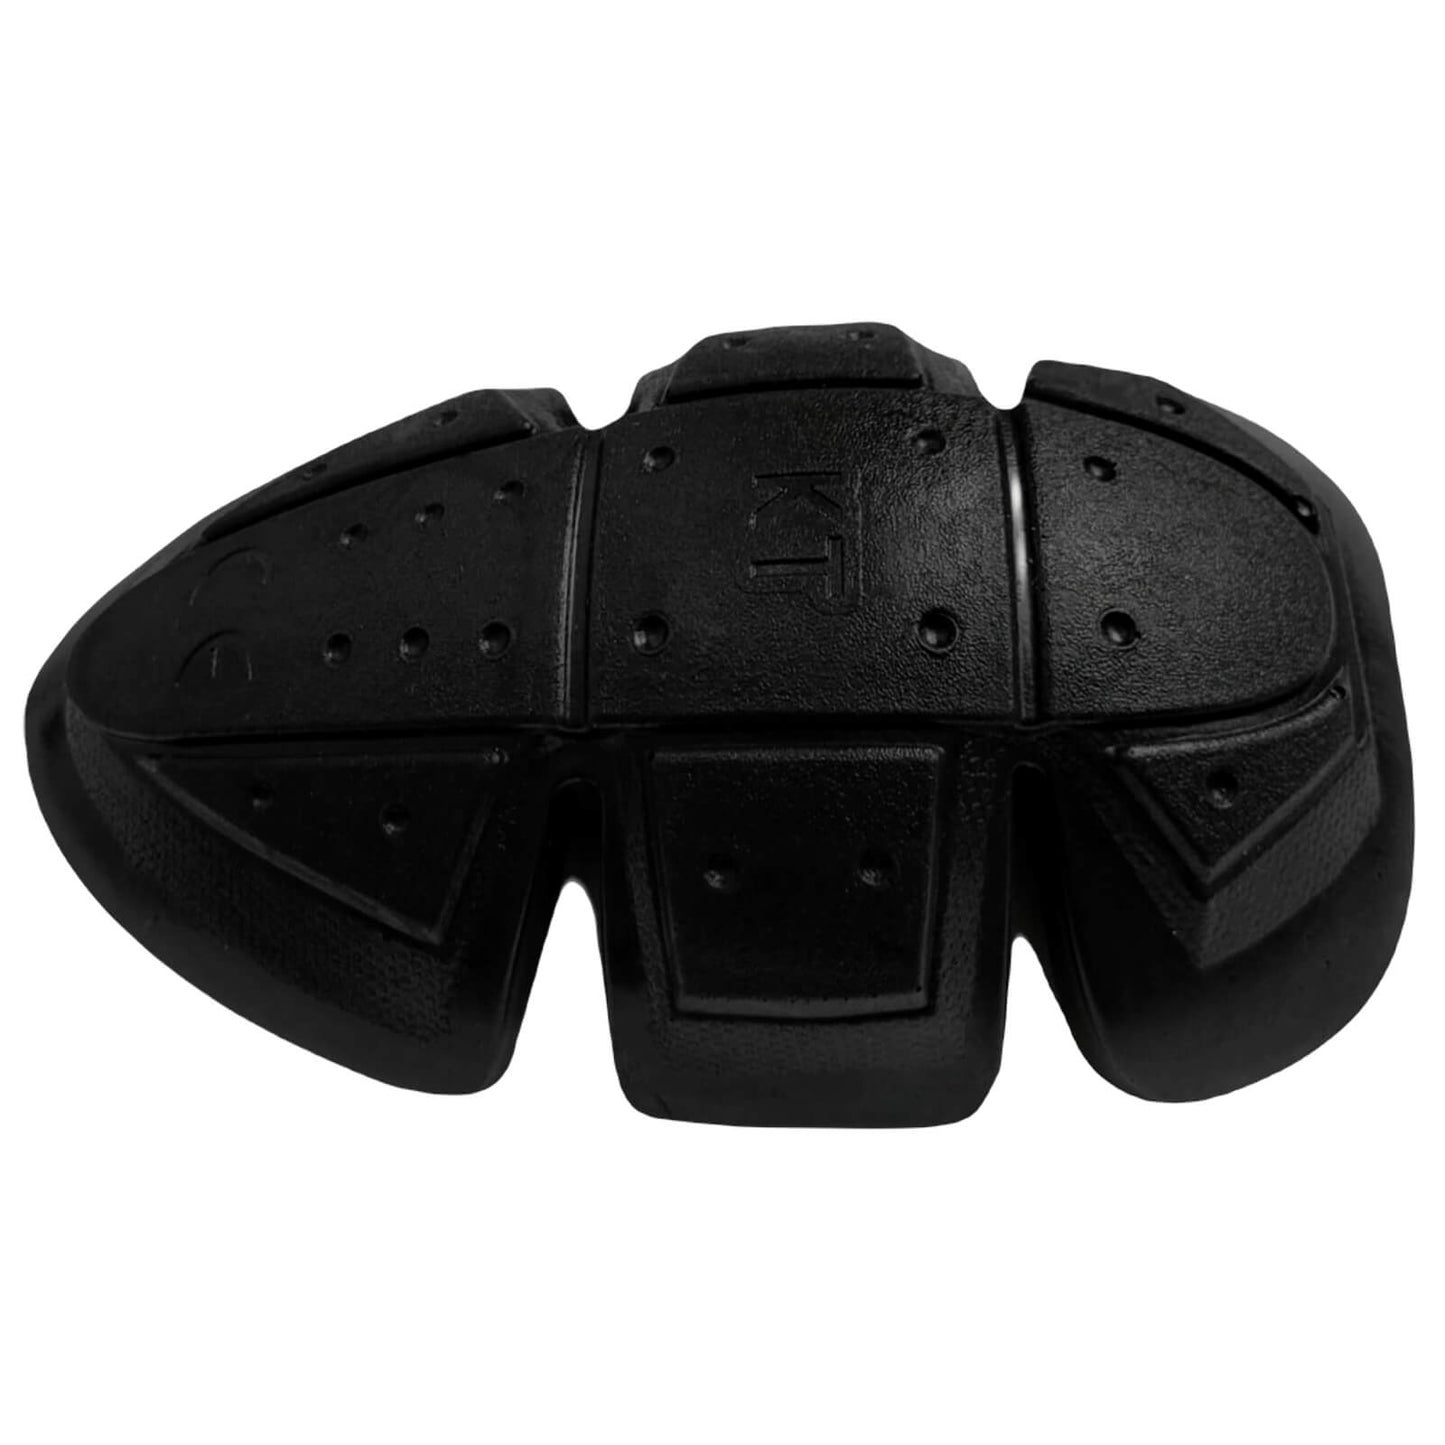 CE 1 Rated Protective Pads Set Center-Back, Shoulder, Elbow, & Hip